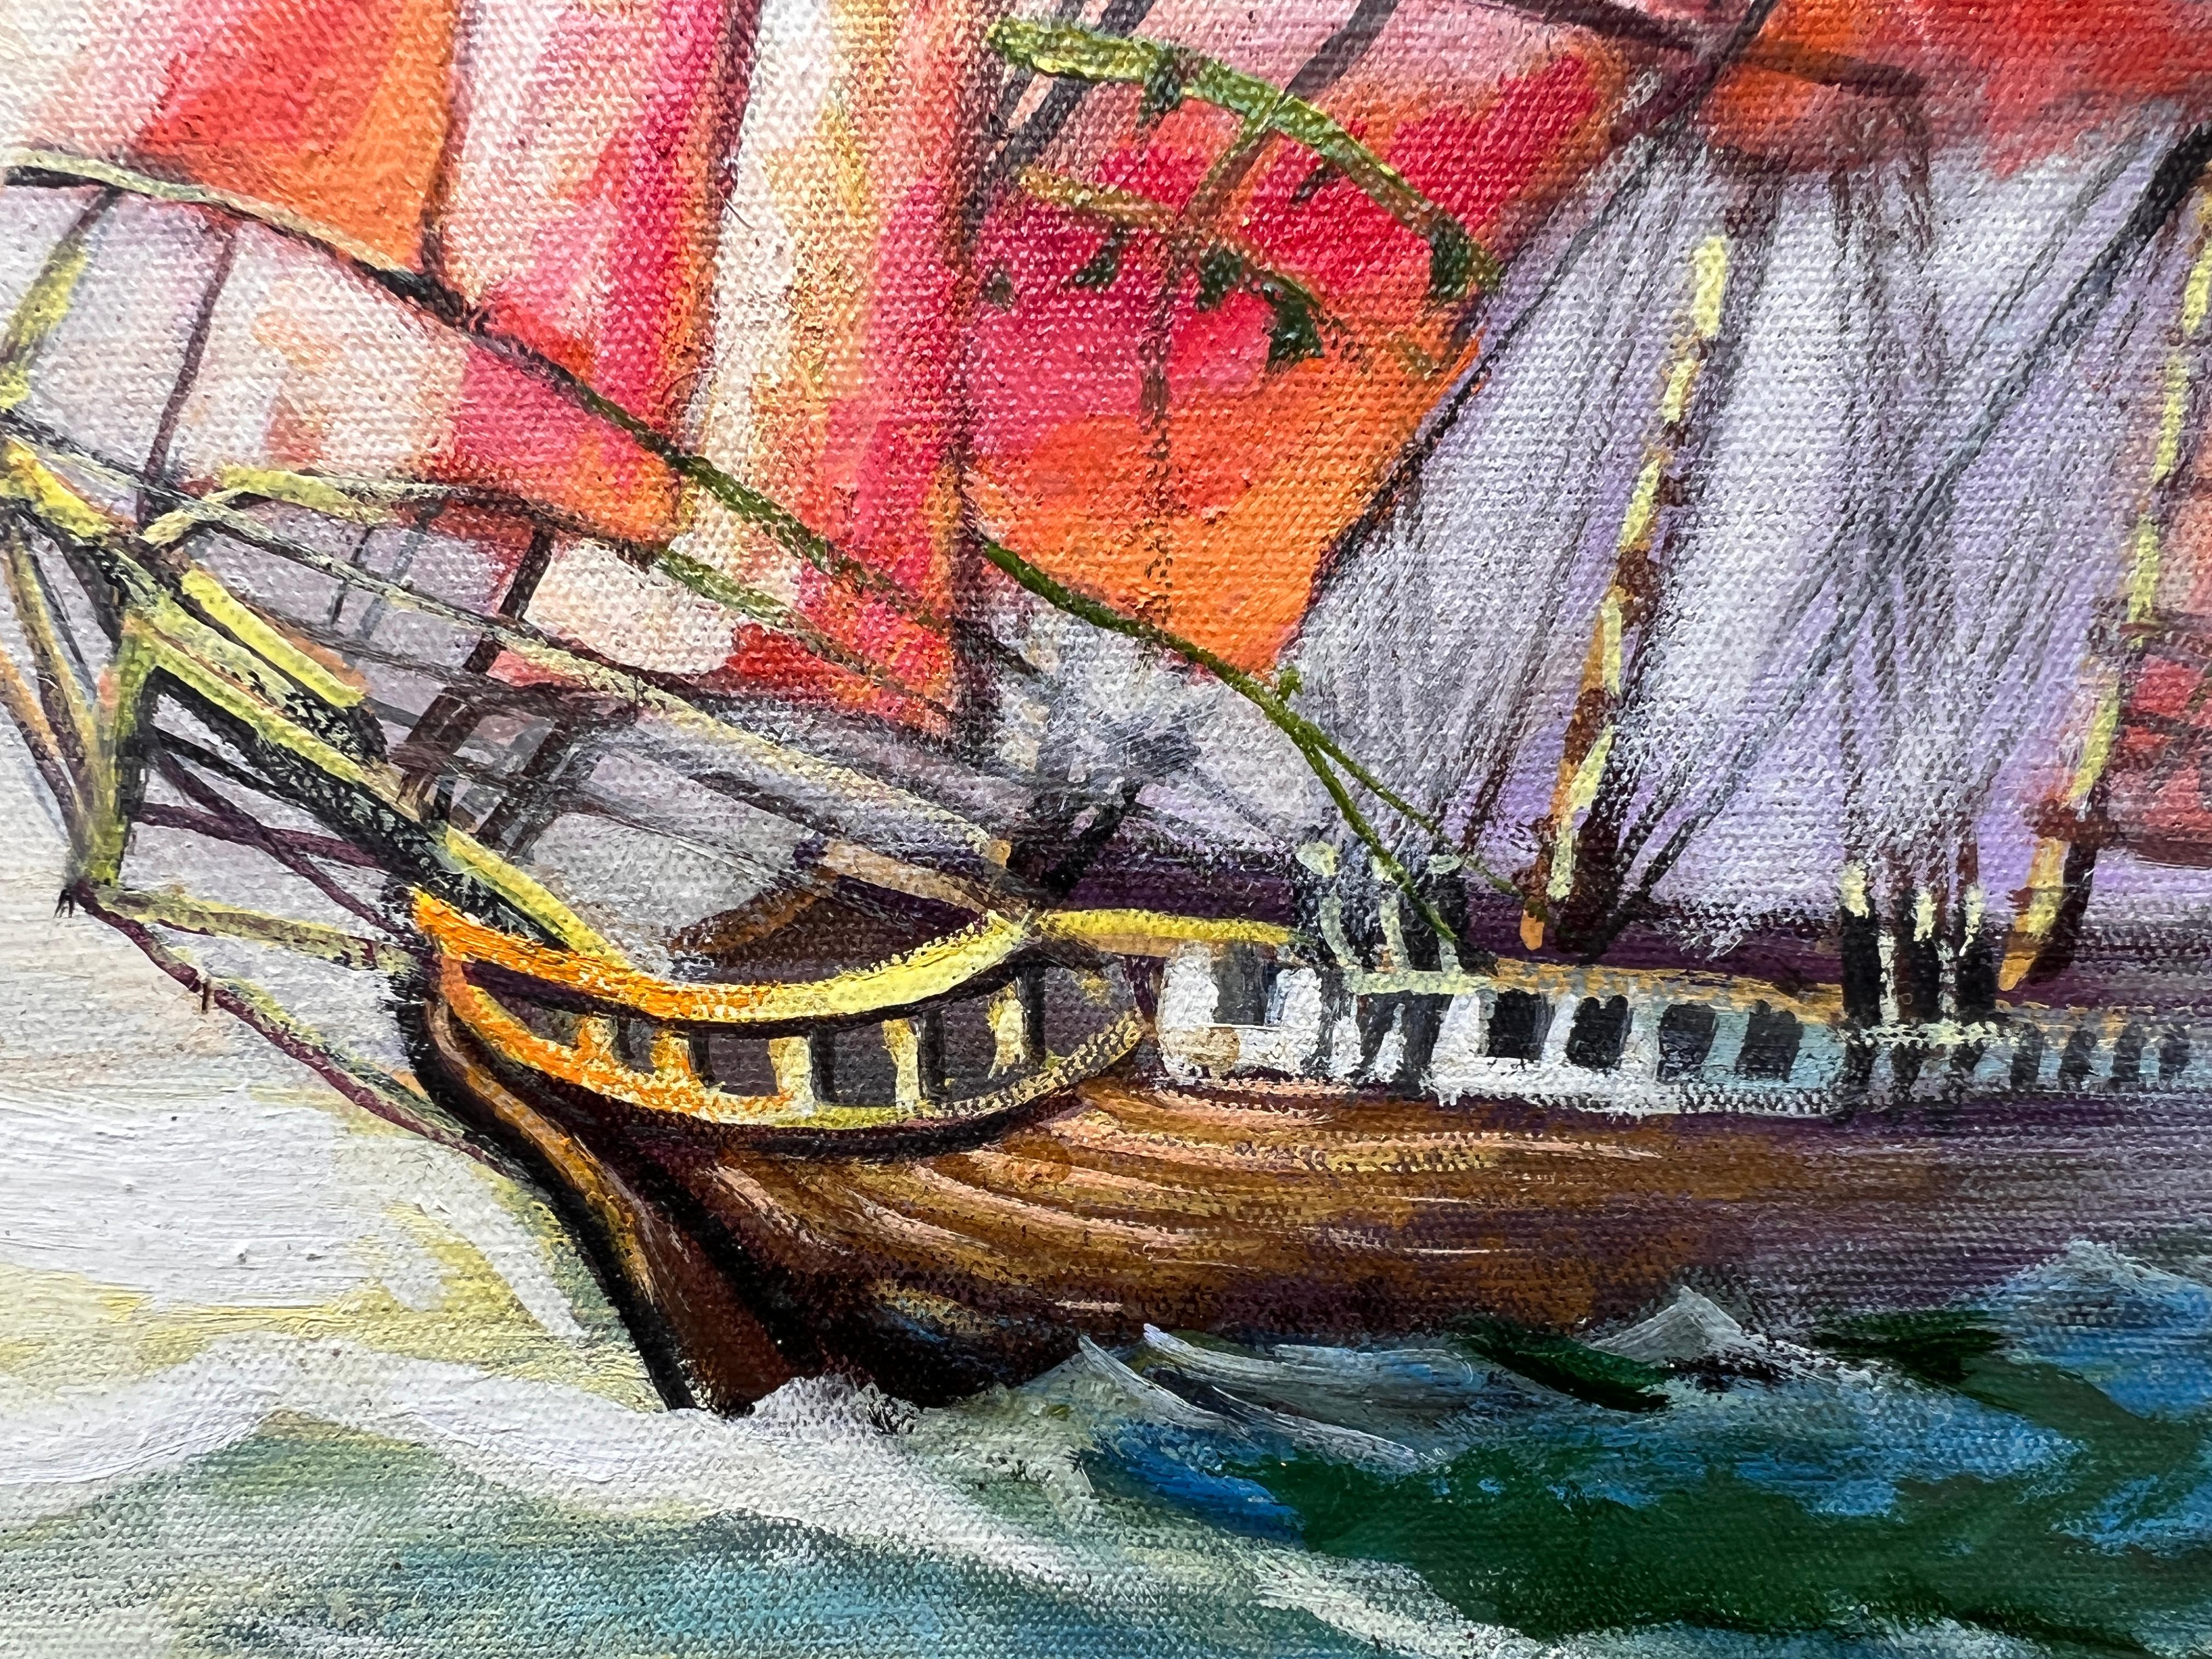 Artist Dobritsin Oil painting on canvas, seascape, Sailing ship, Framed For Sale 4